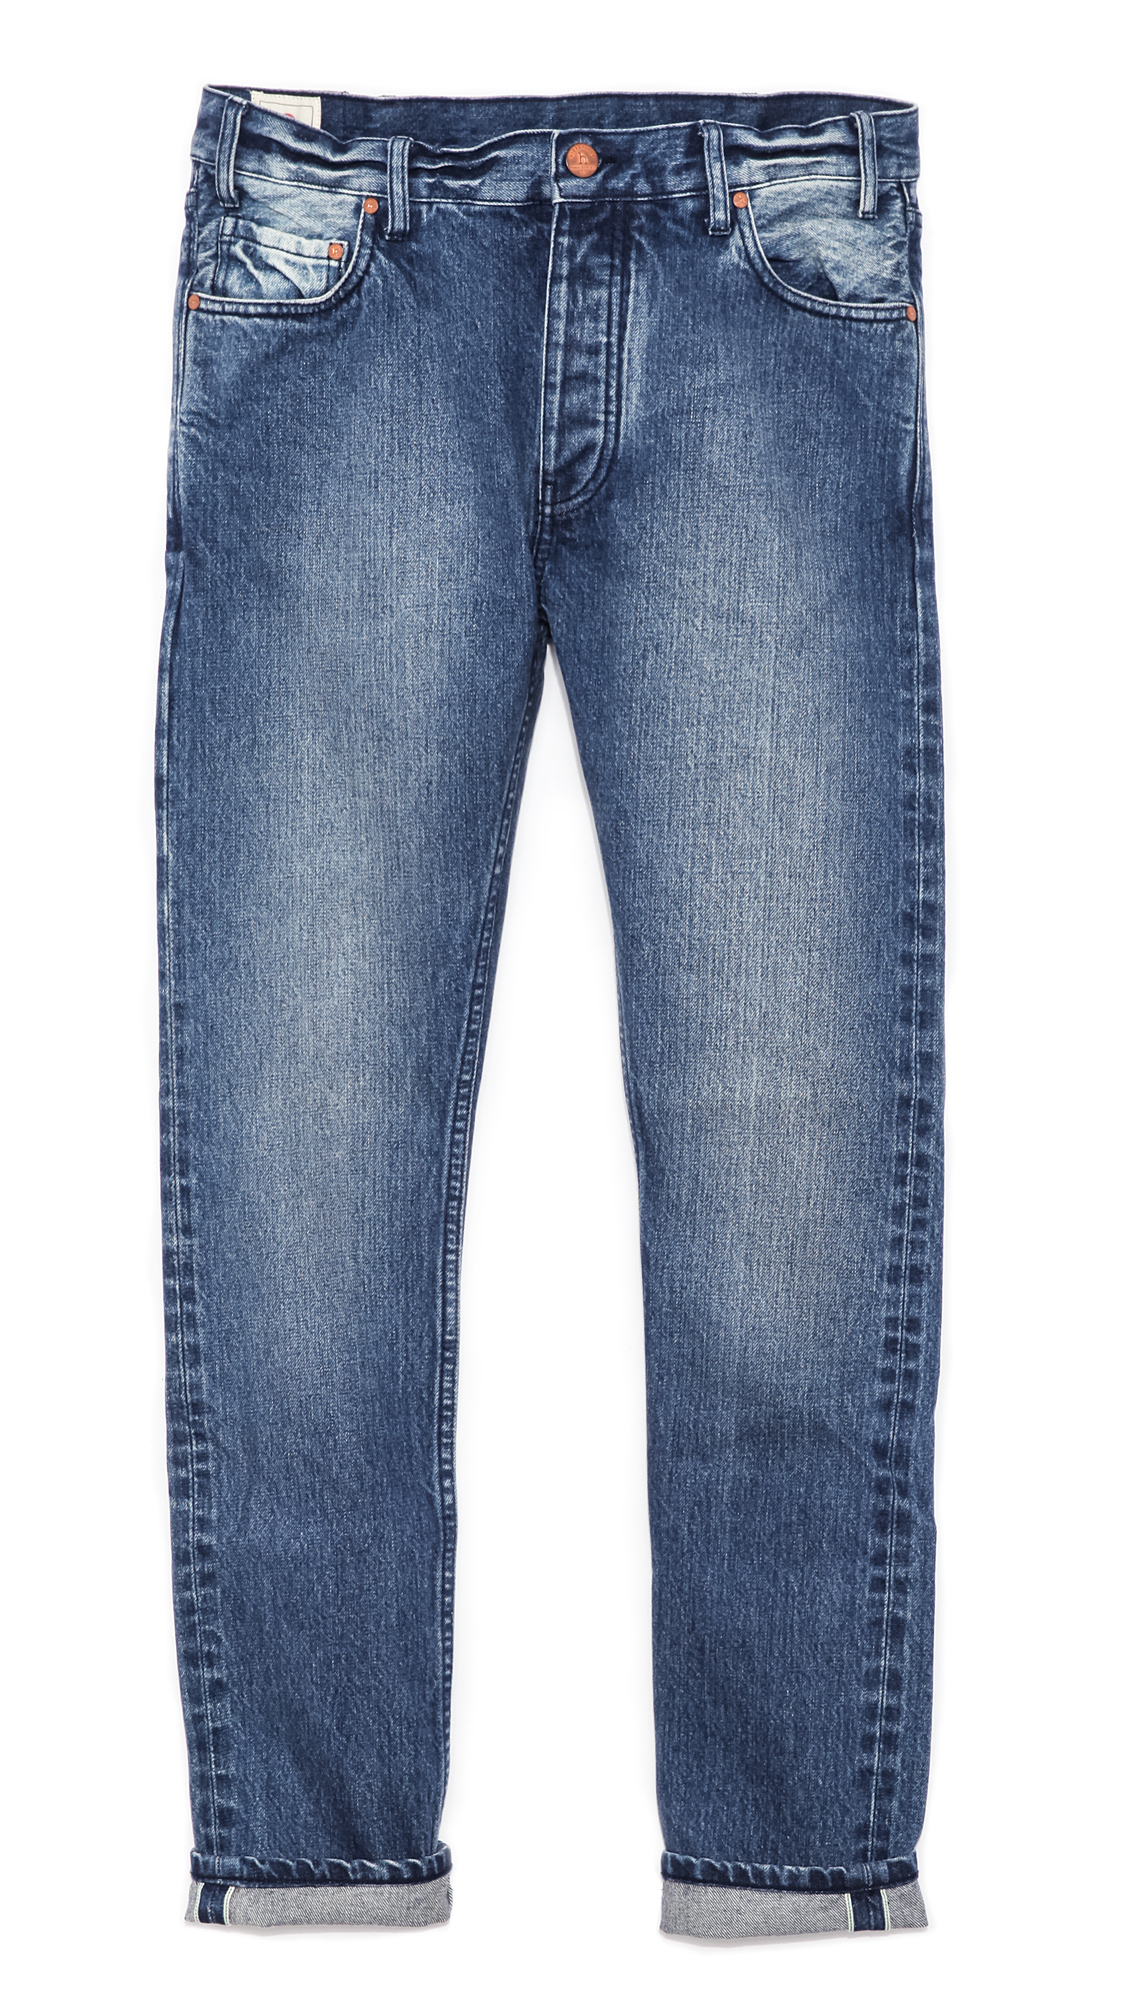 Han Kjobenhavn Lean Fitted Jeans in Blue for Men - Lyst